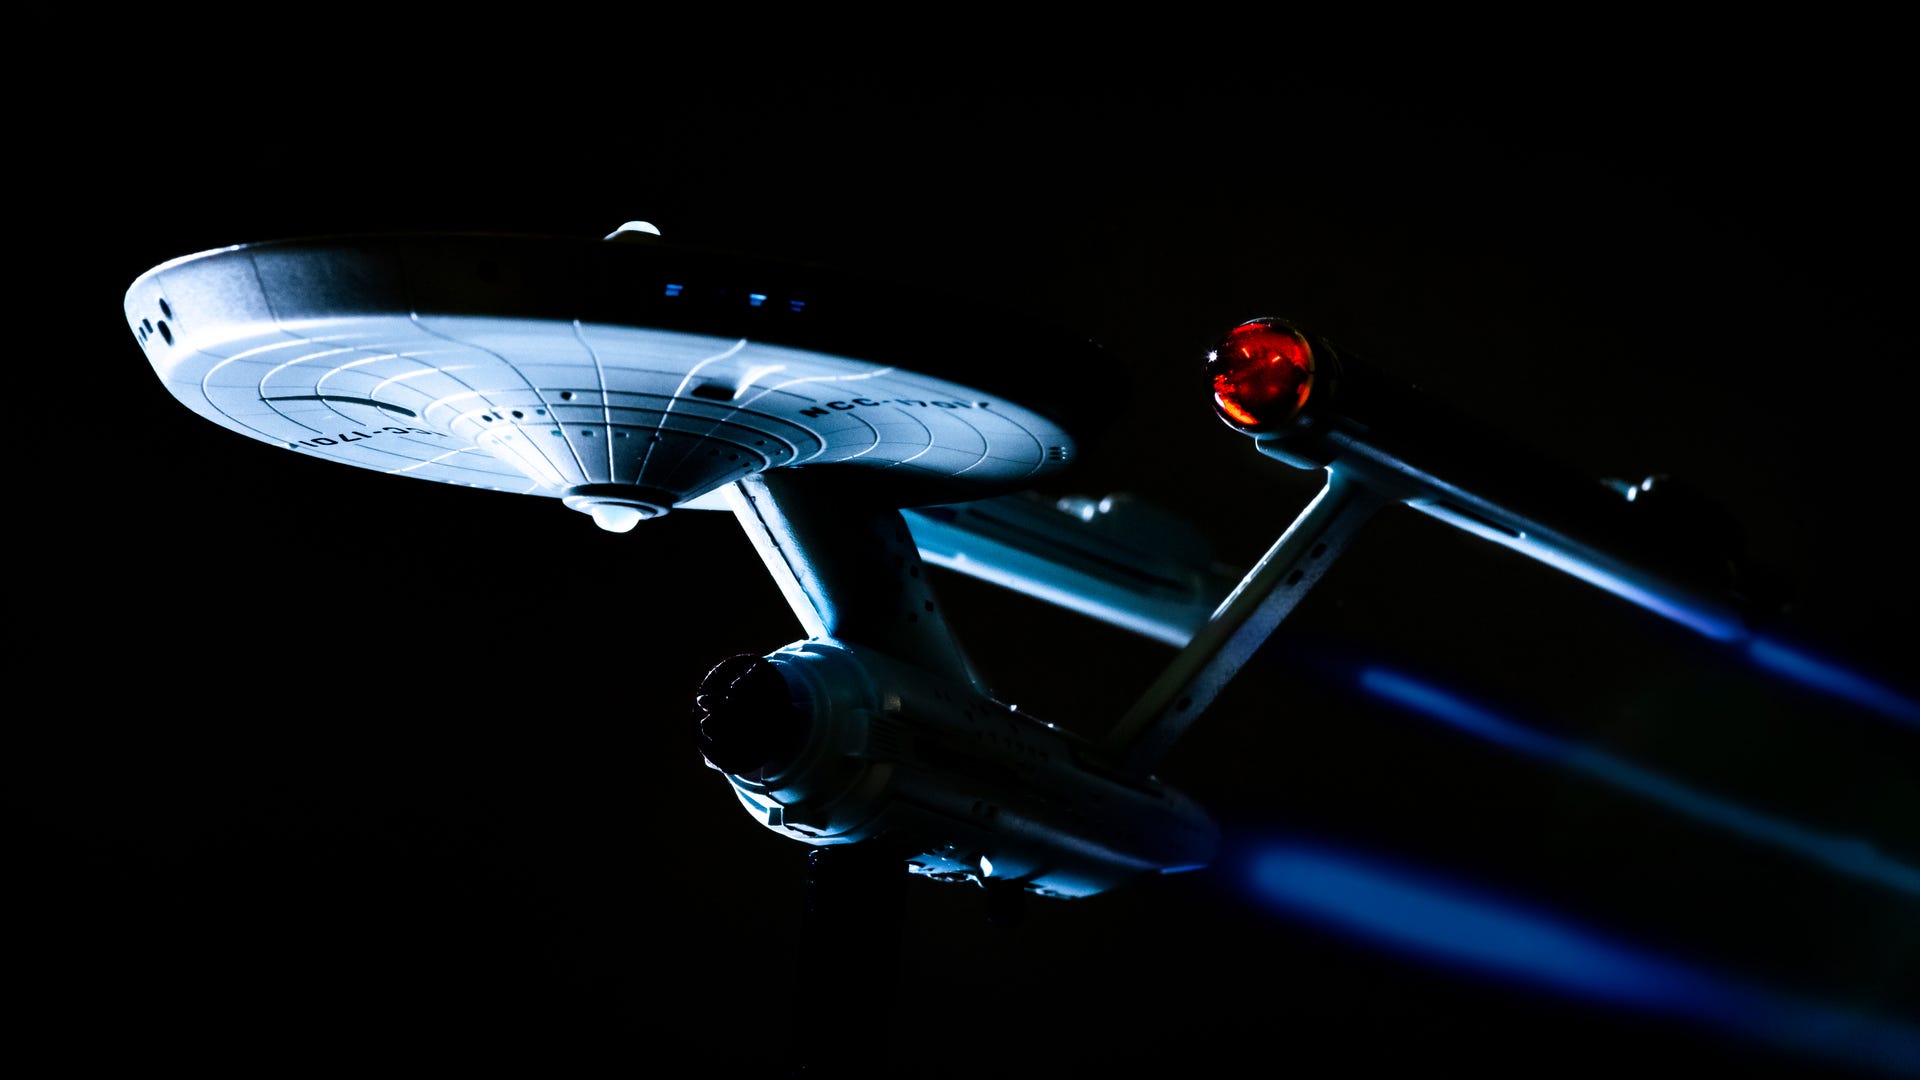 Watch Adam Savage Go “Hands On” With the Original Enterprise From ‘Star Trek’